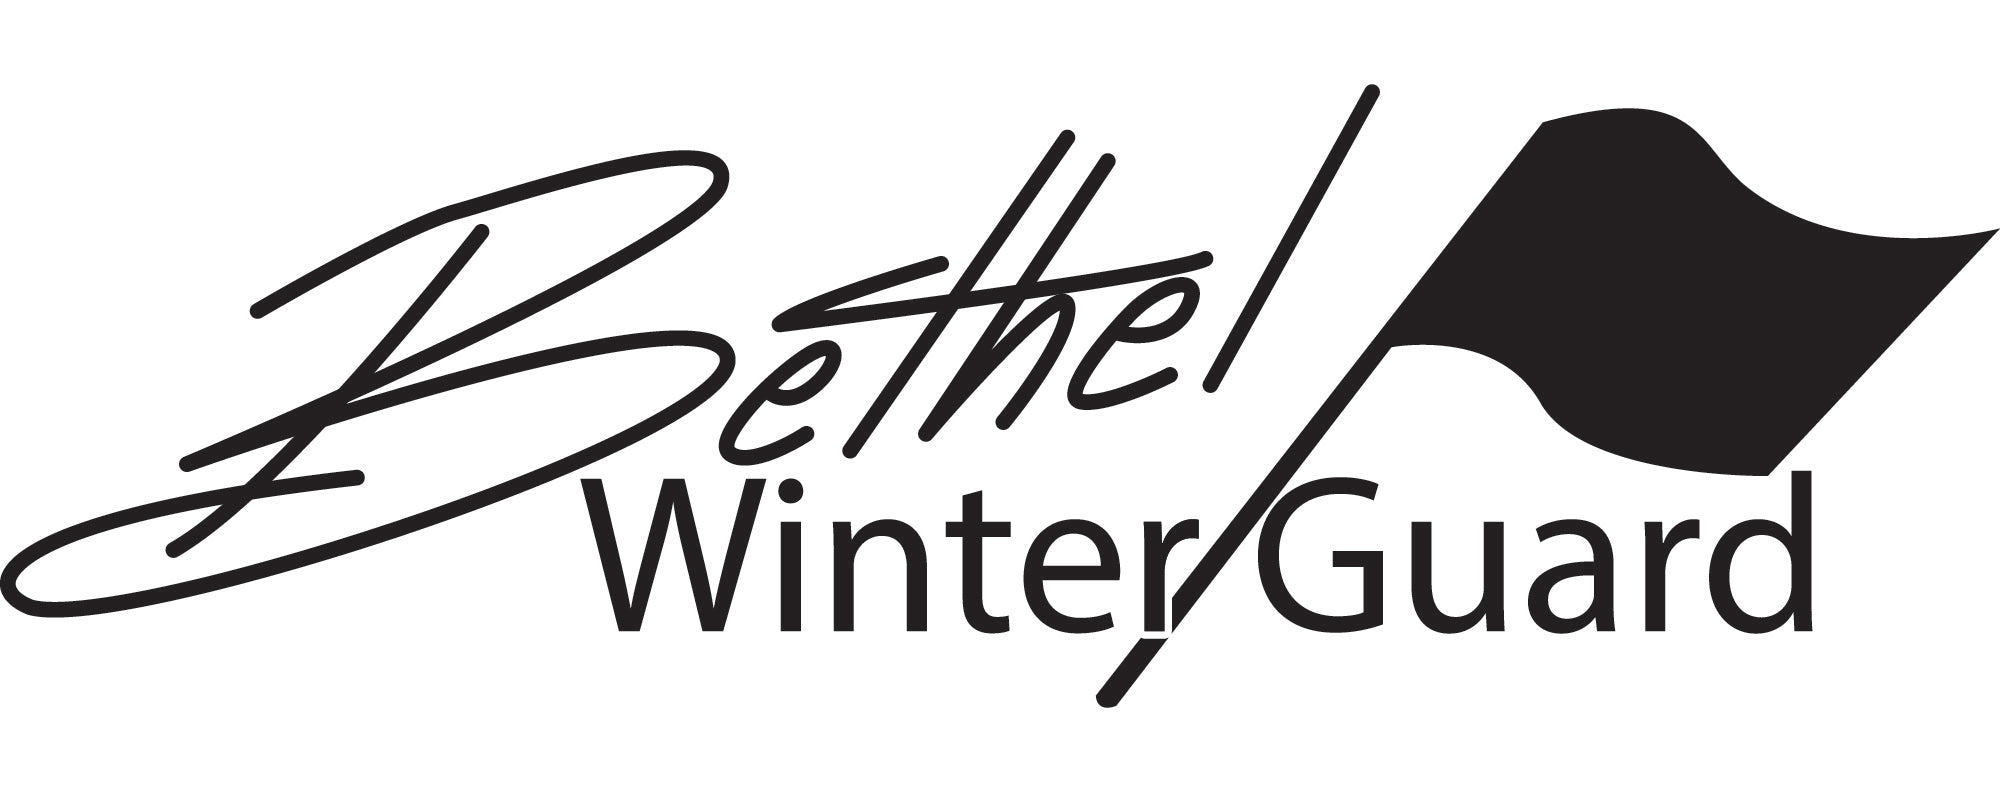 Bethel Winter Guard